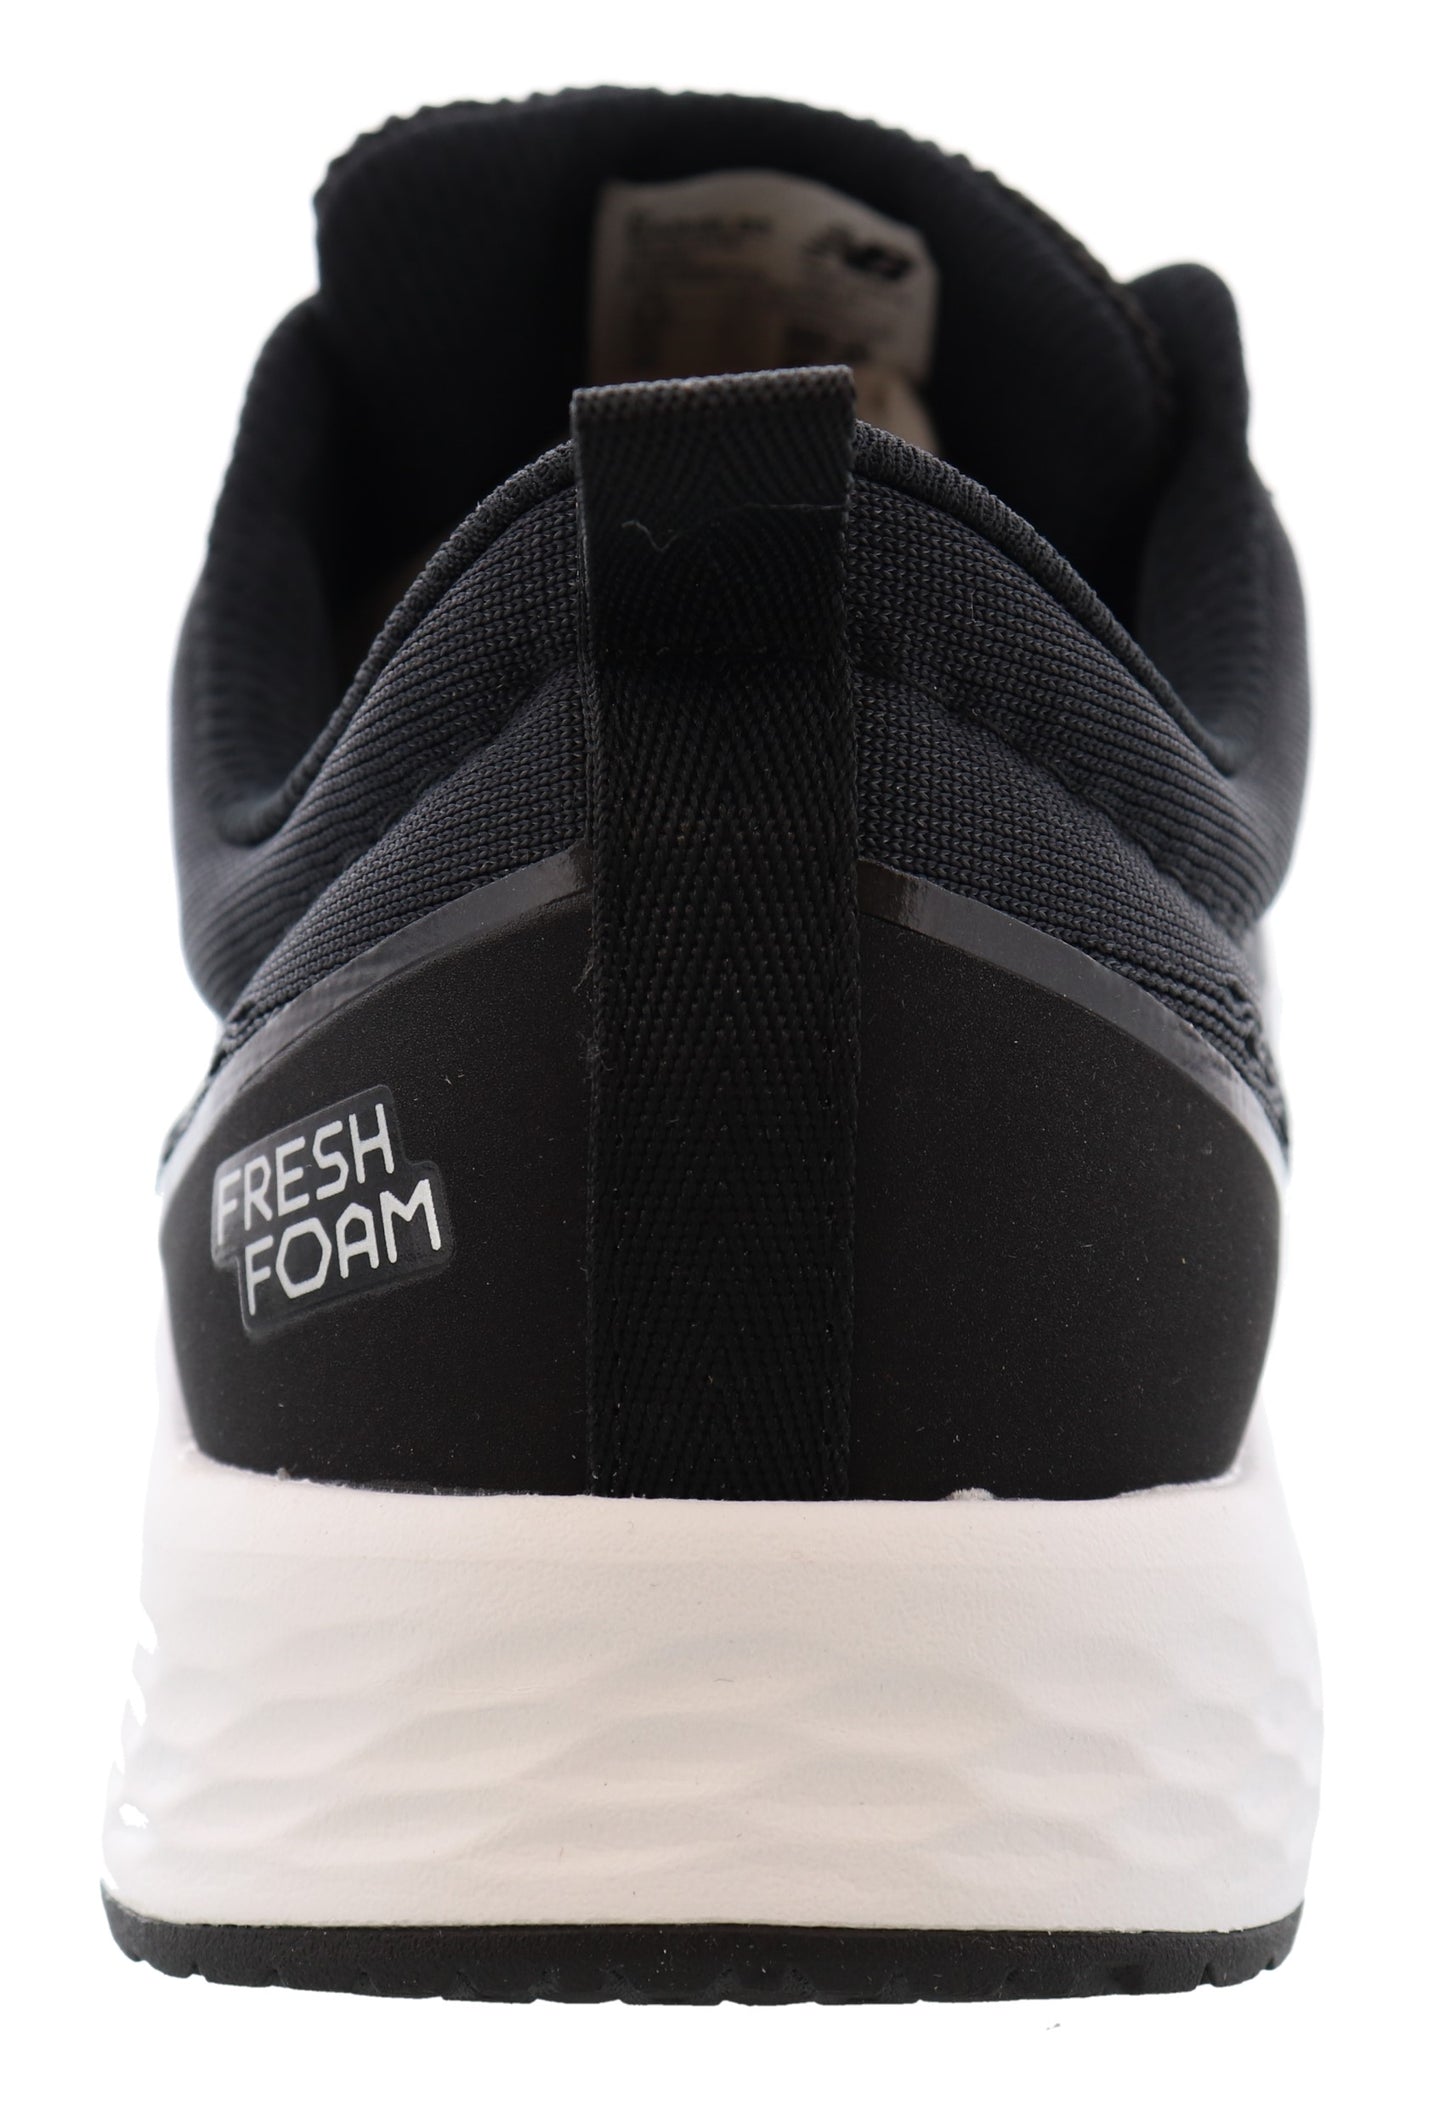 
                  
                    New Balance Men's Arishi v3 Fresh Foam Lightweight Running Shoes
                  
                